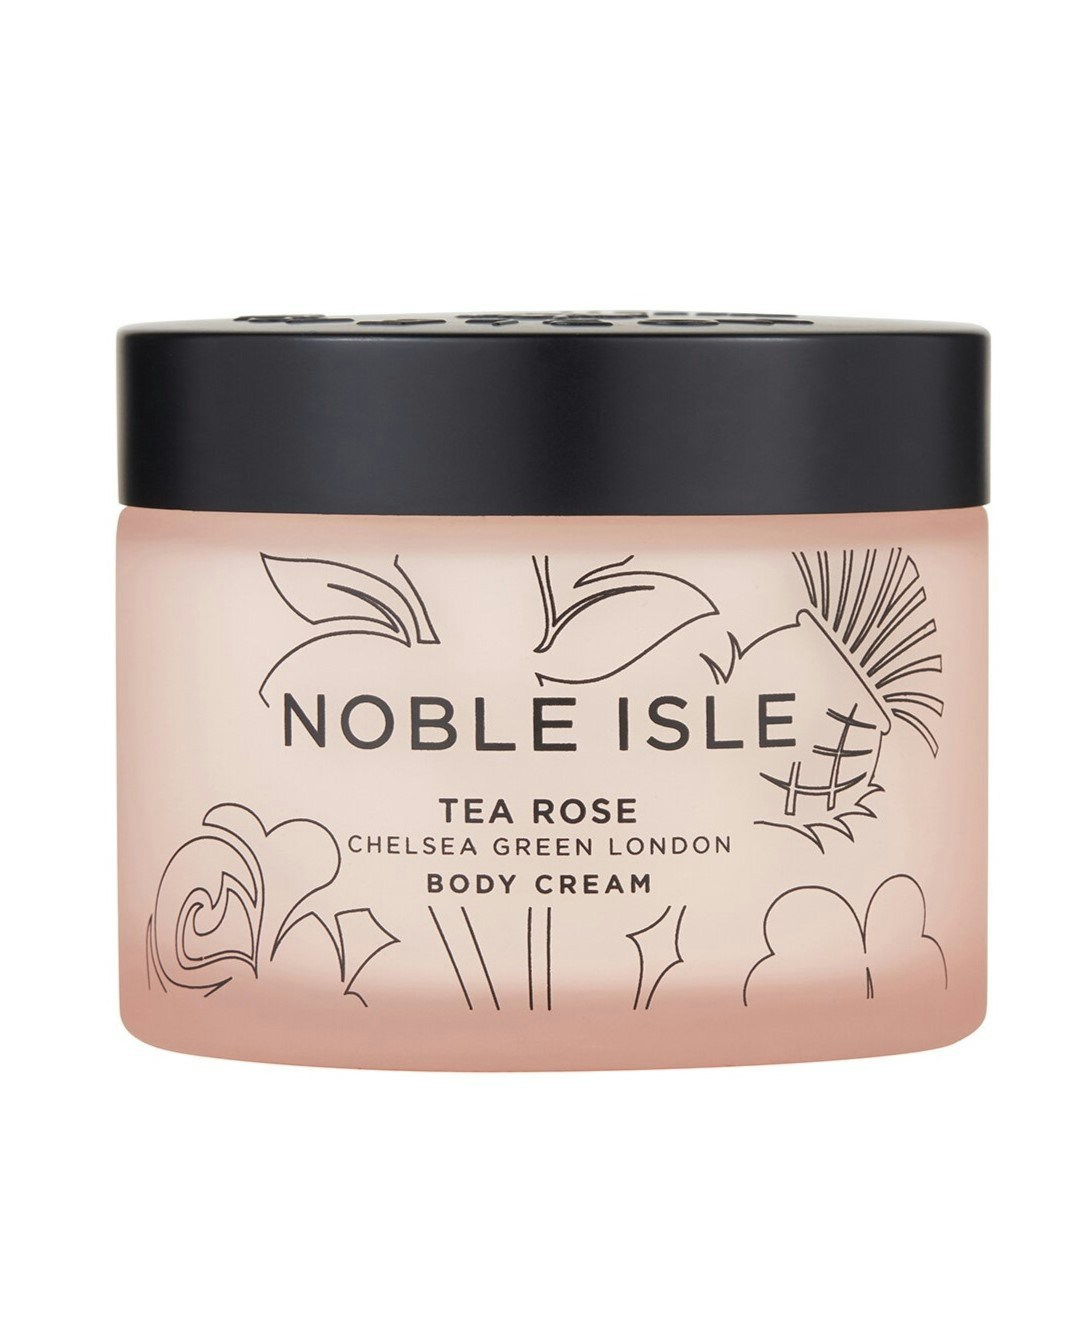 Noble Isle Tea Rose Body Cream, £43